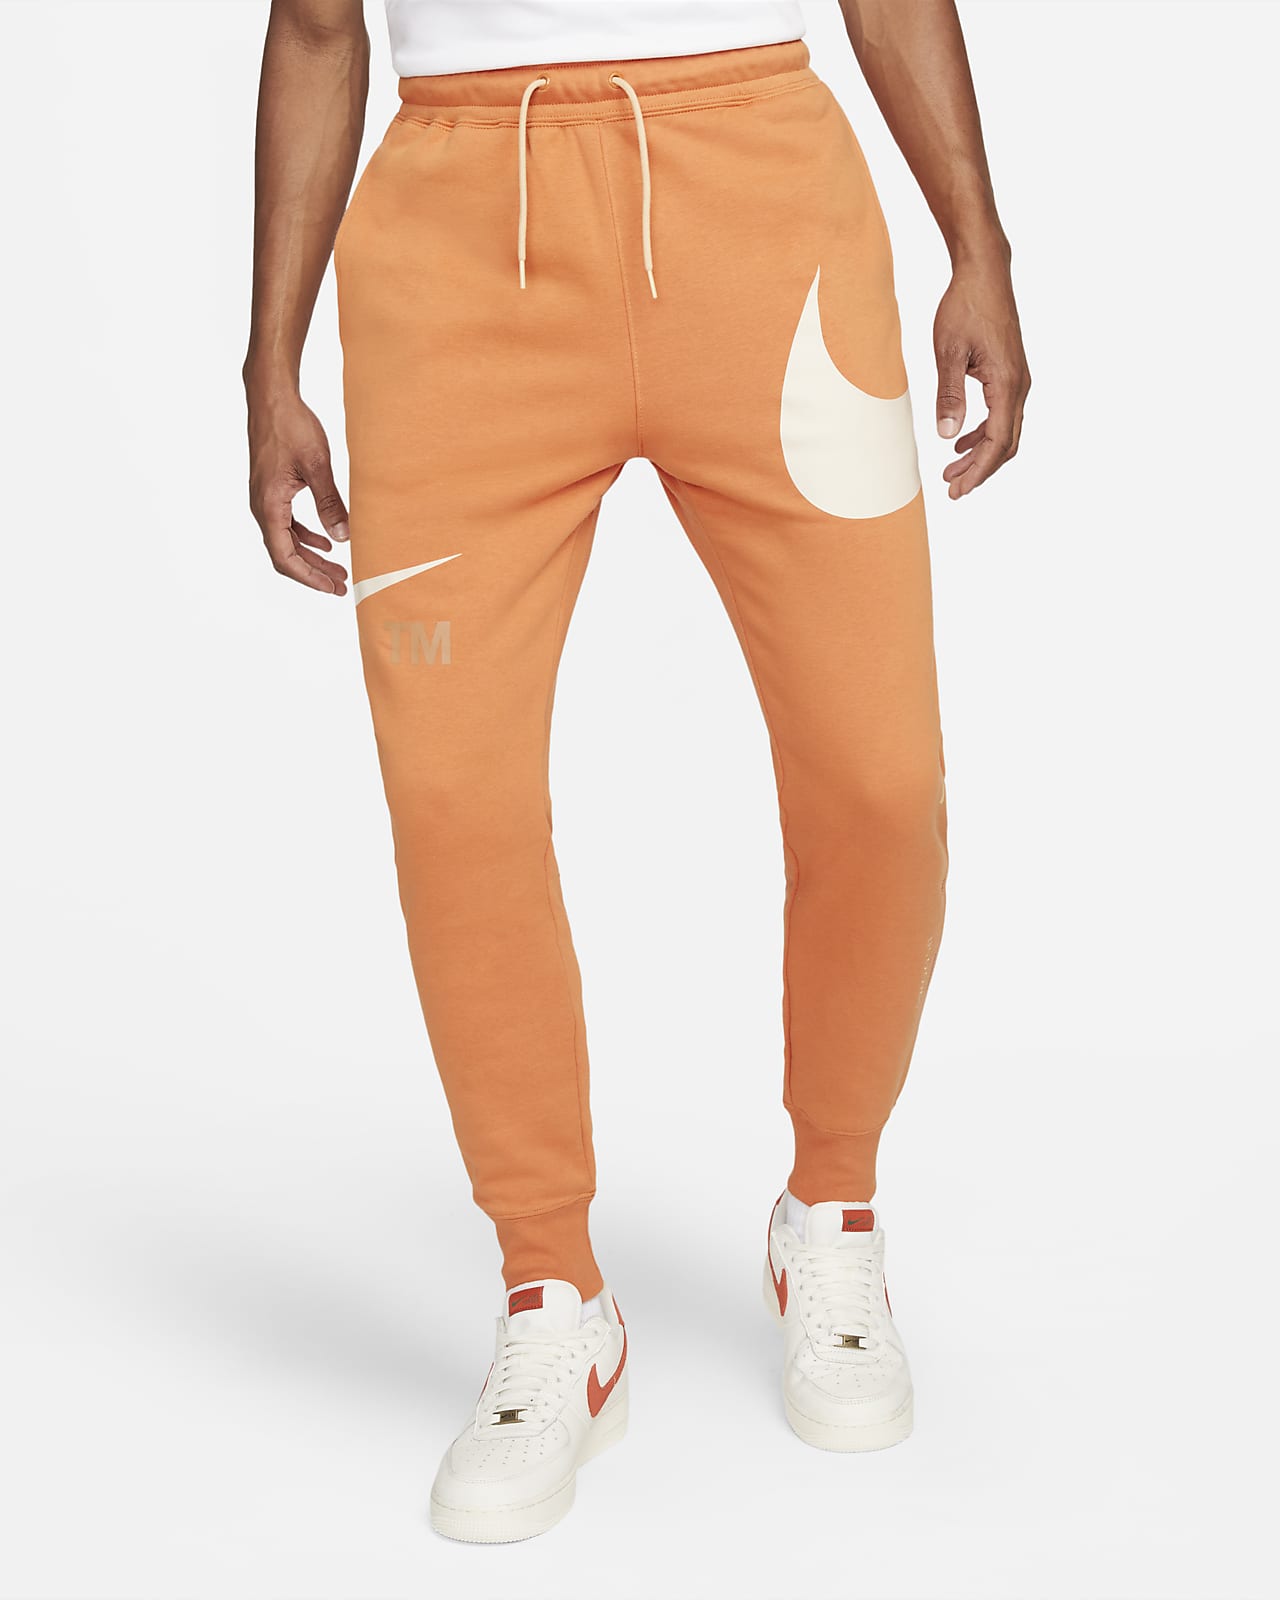 Pantaloni con rovescio semispazzolato Nike Sportswear Swoosh - Uomo